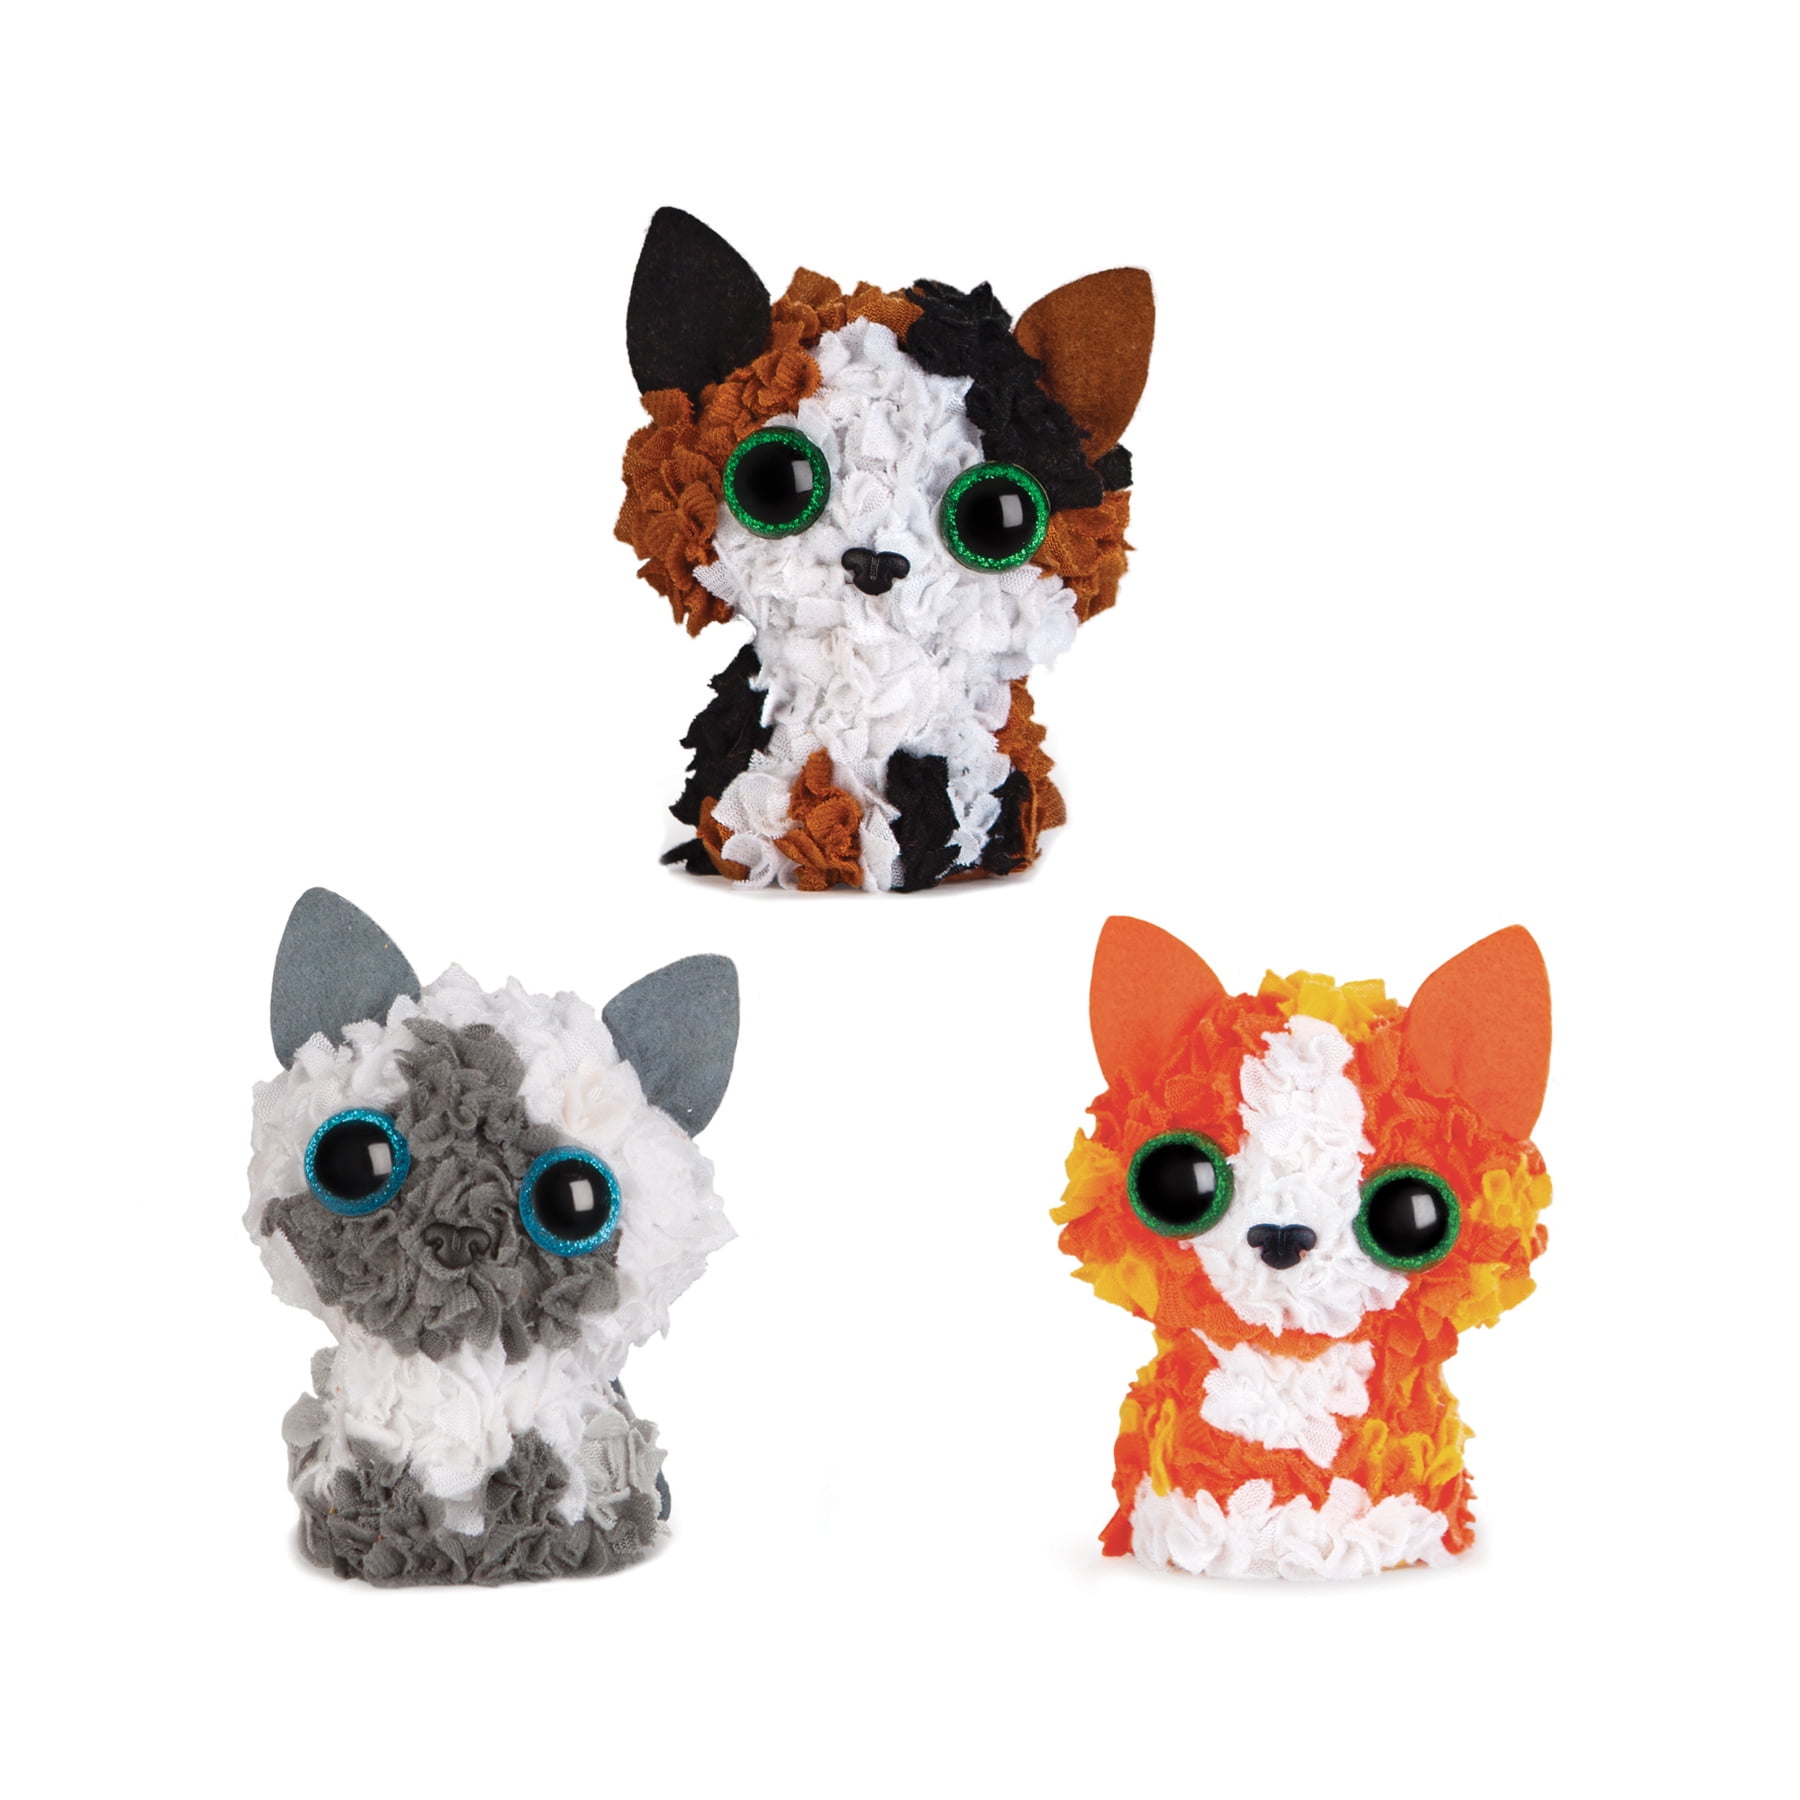 ORB Toys PlushCraft 3D Mini DIY Plush Toy Crafting Kit 3 Pack - Kittens 